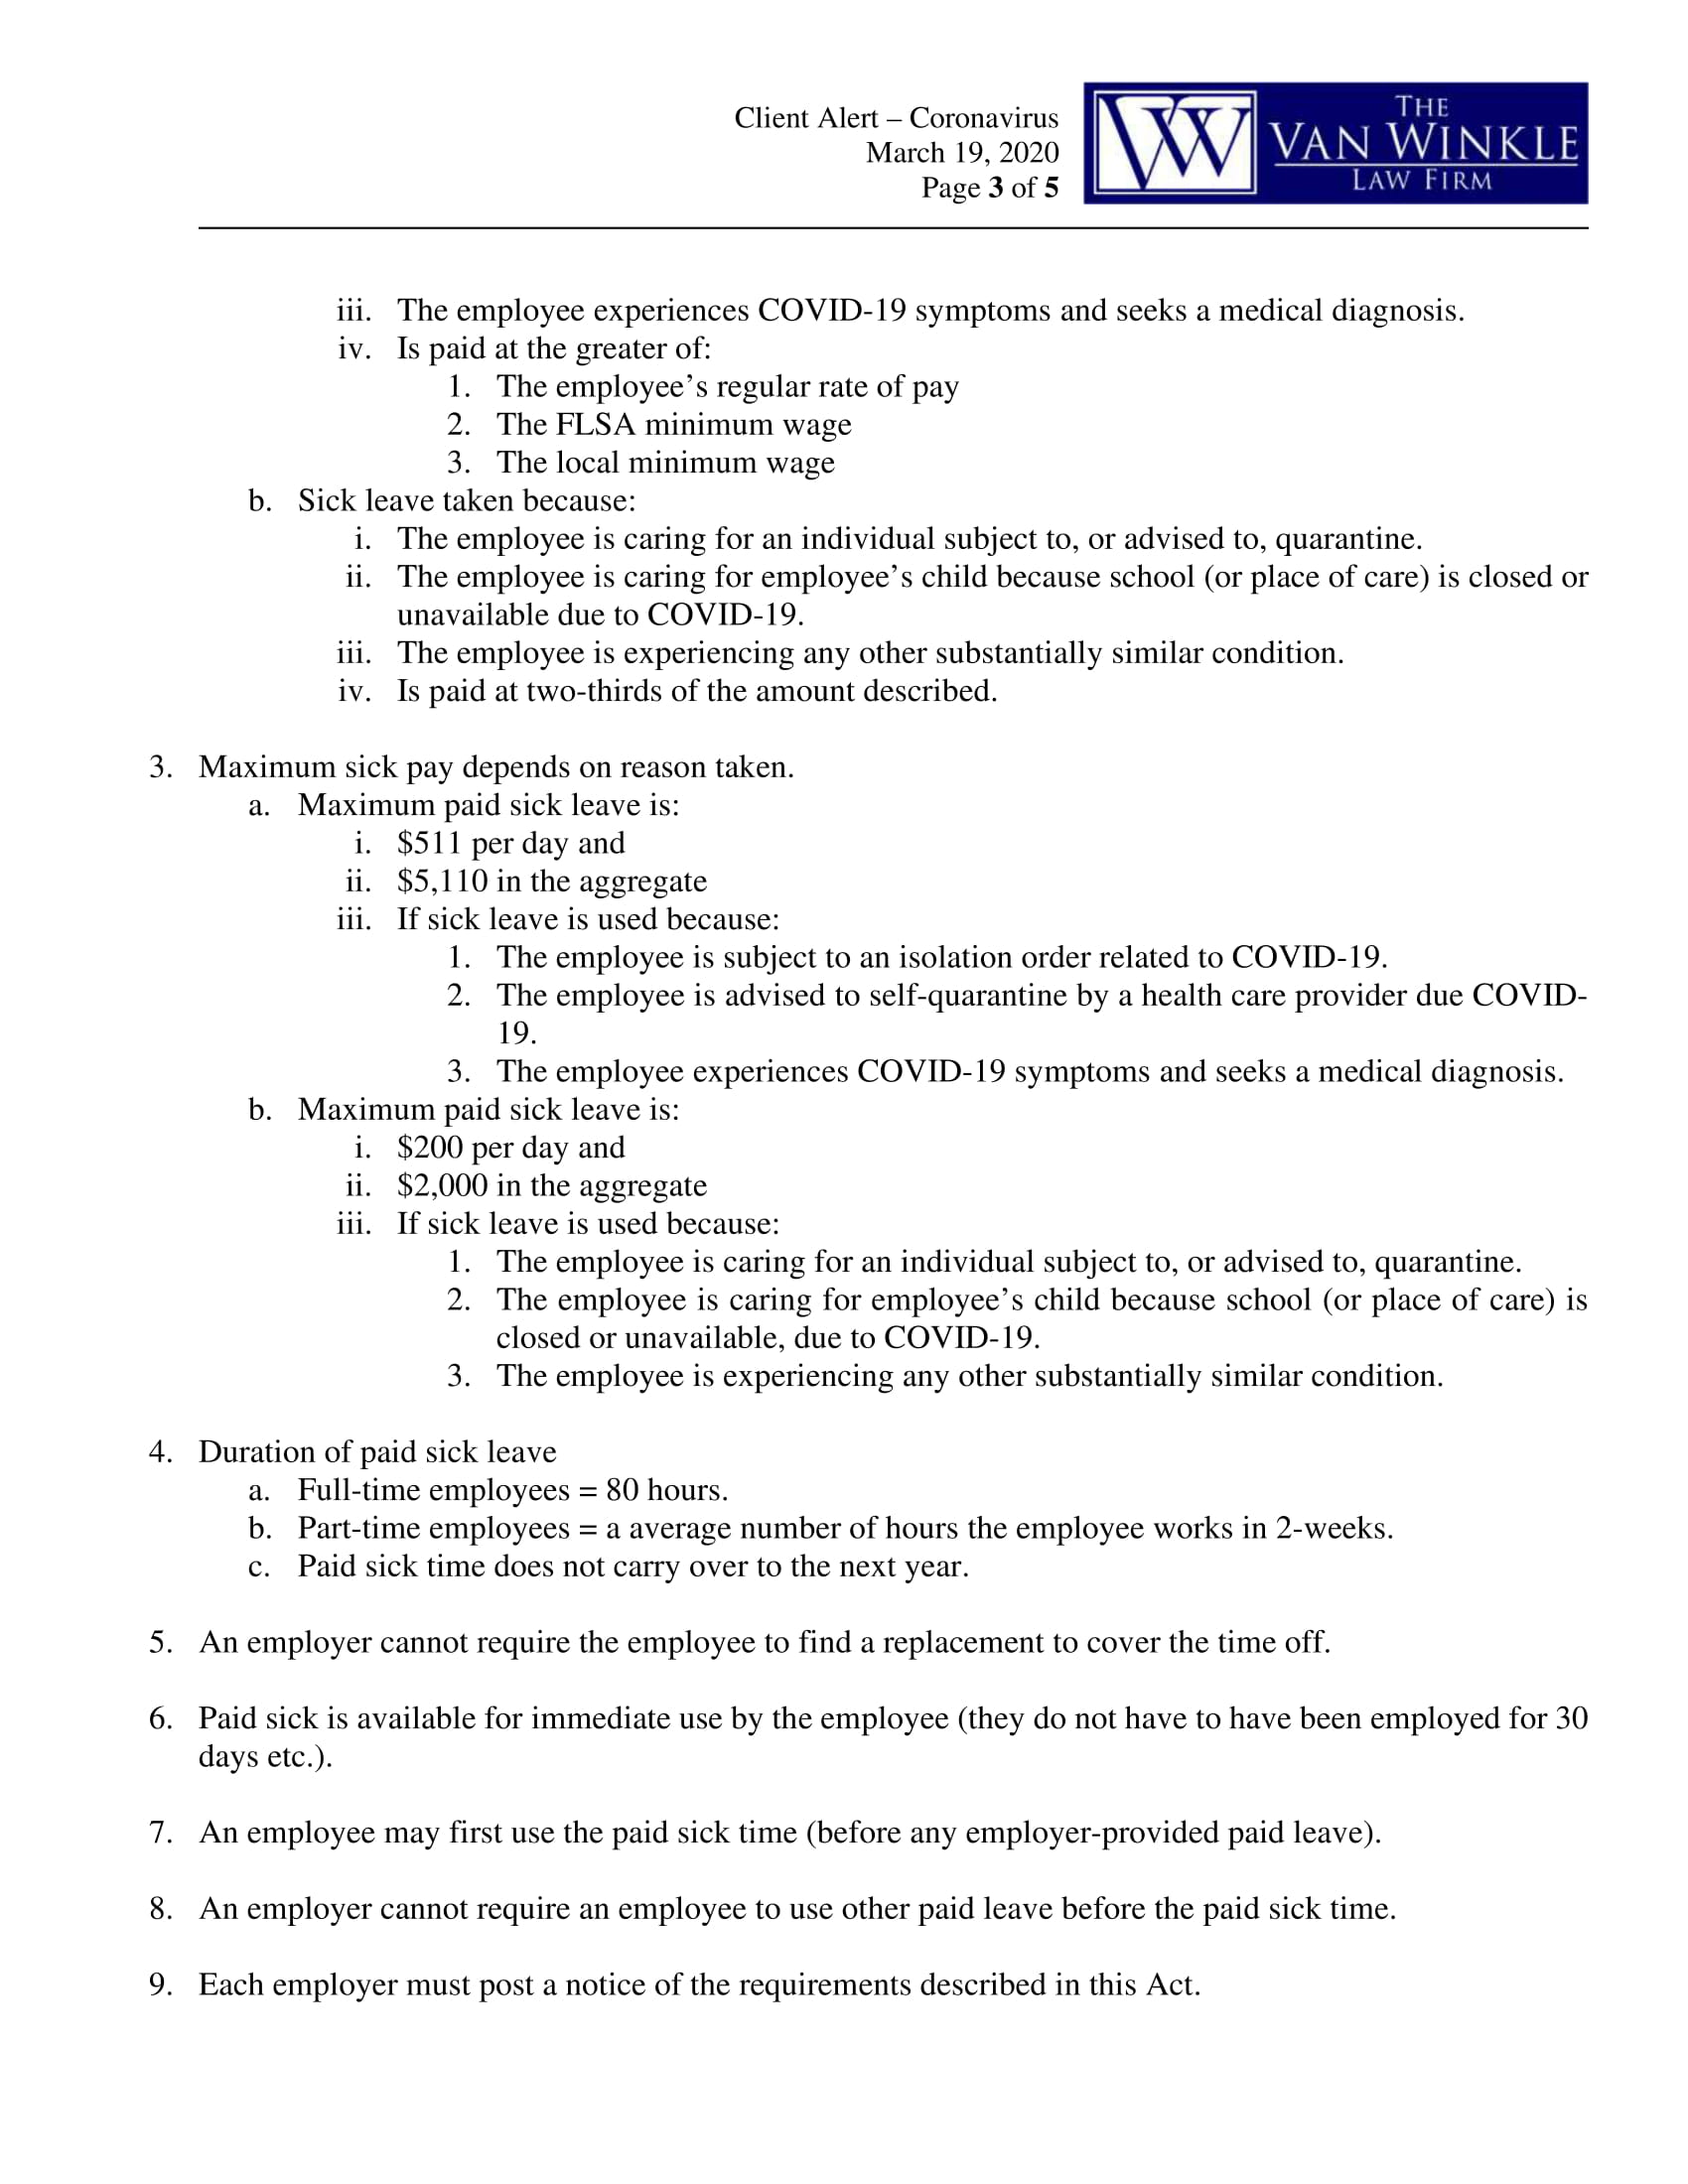 Families First Coronavirus Response Act Page 3